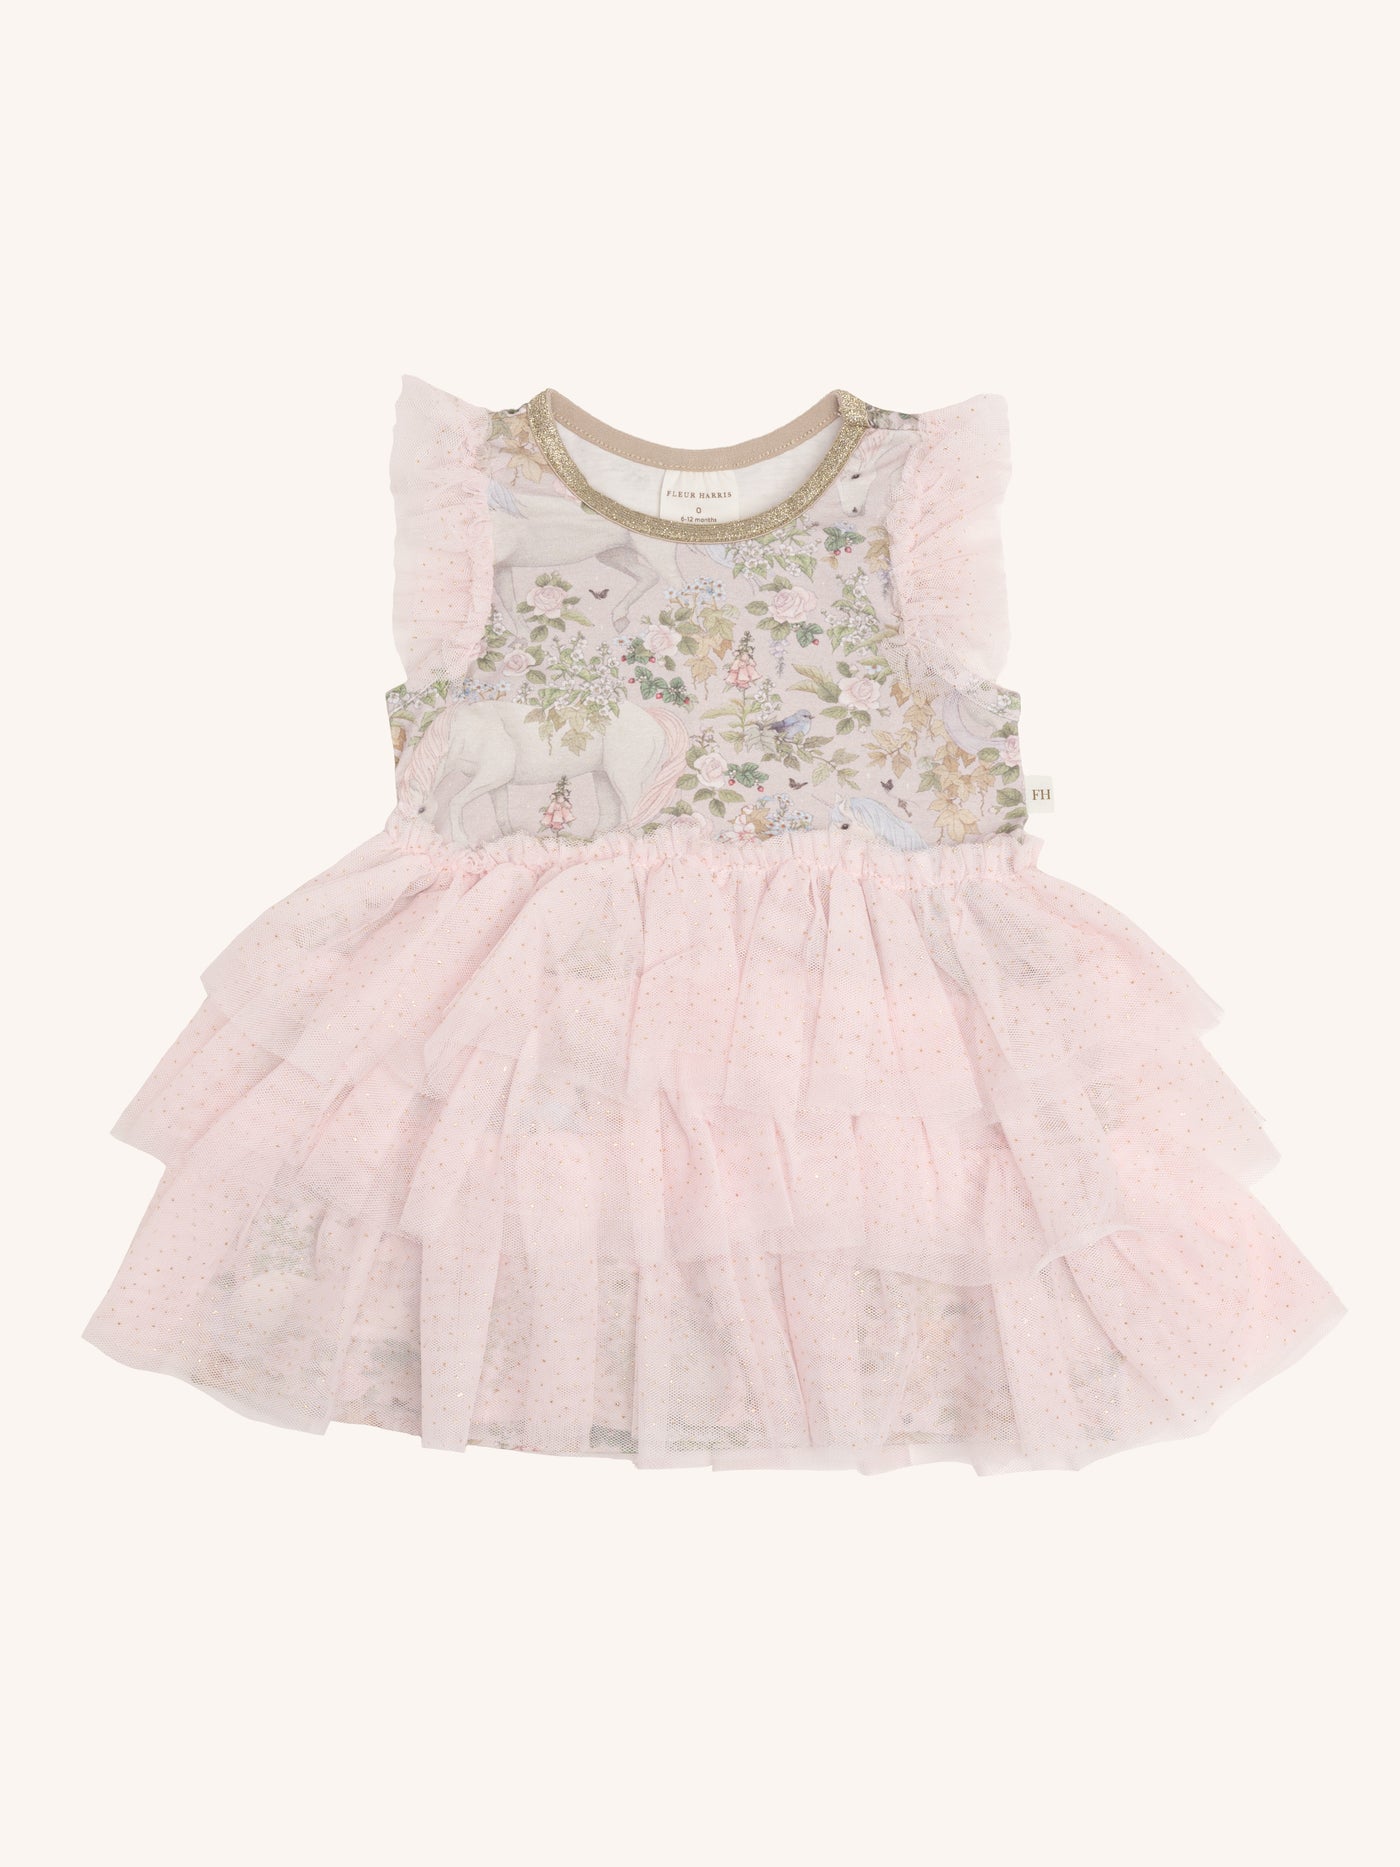 'Field of Dreams' Signature Tutu Dress - Baby - Soft Taupe